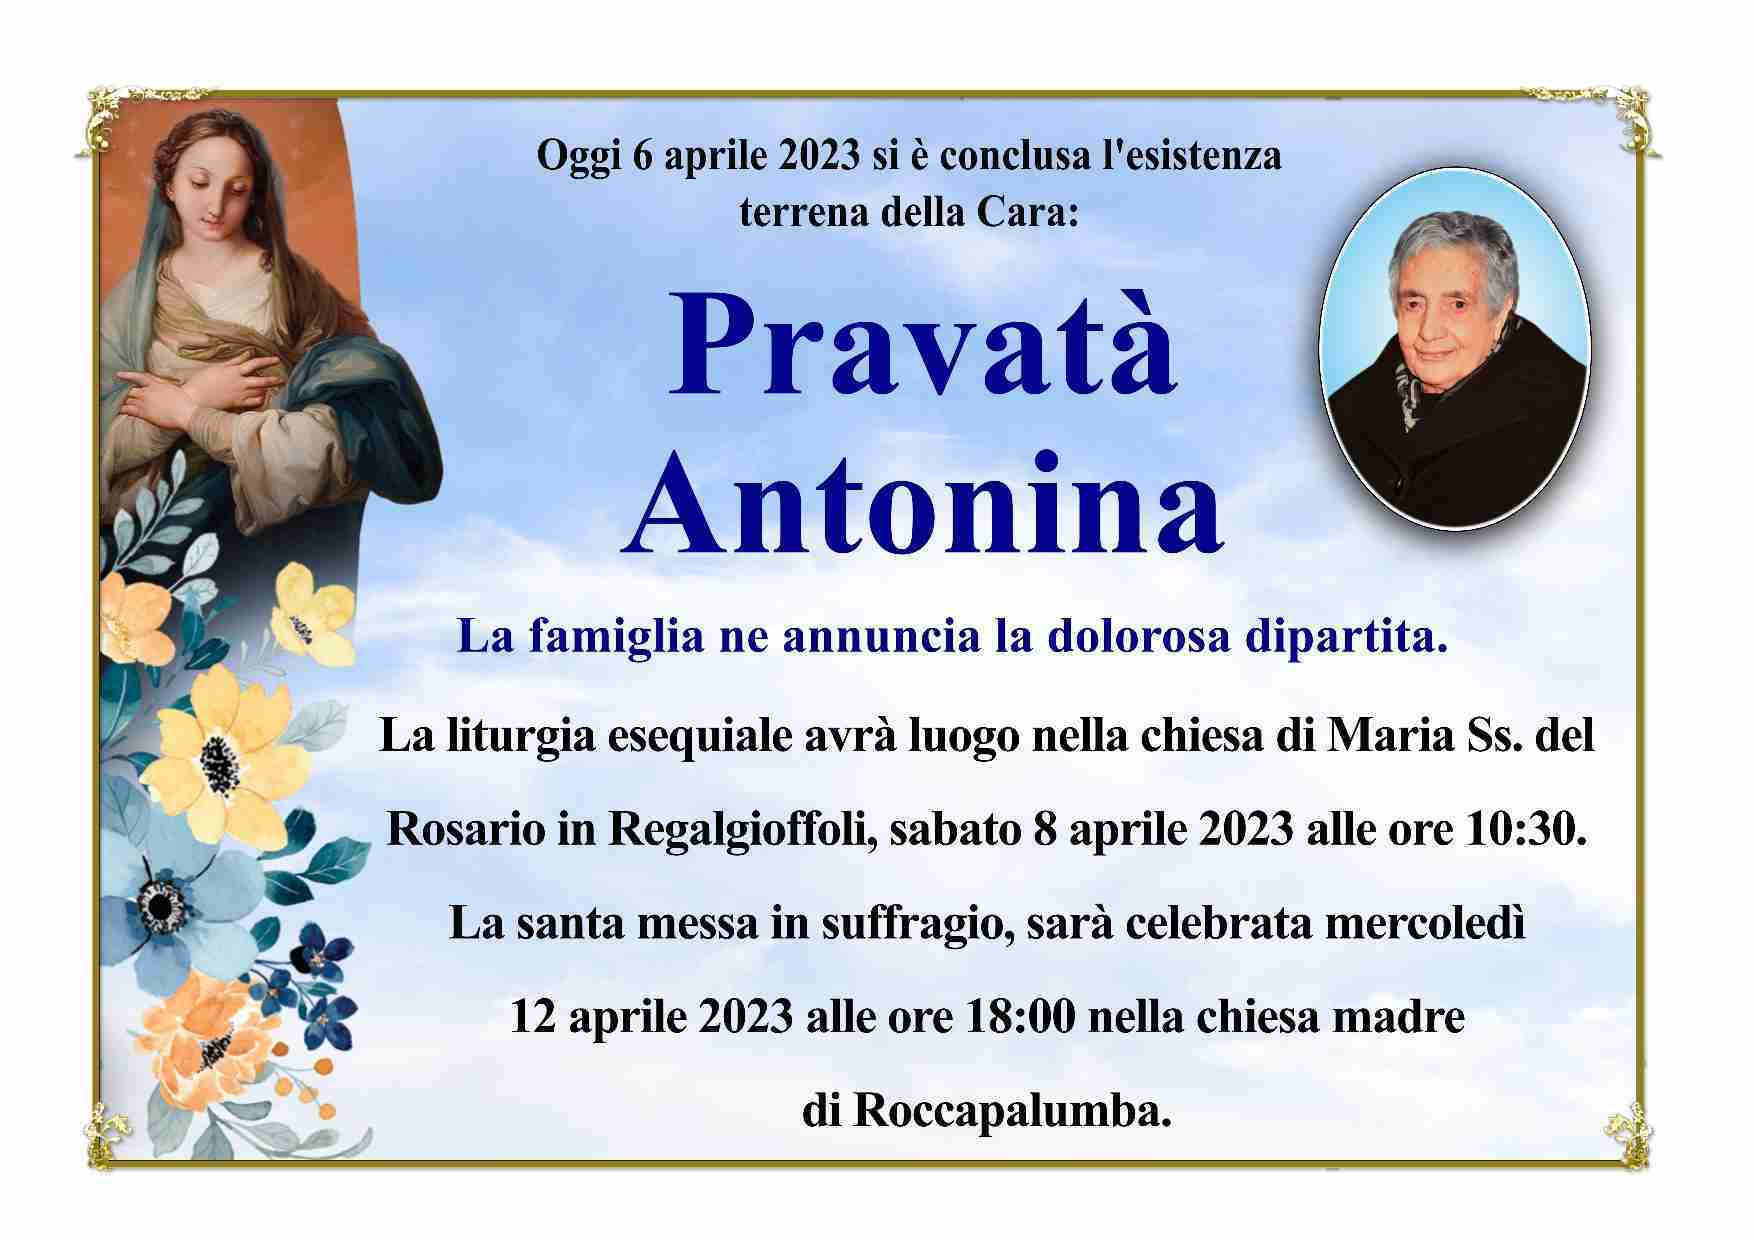 Antonina Pravatà